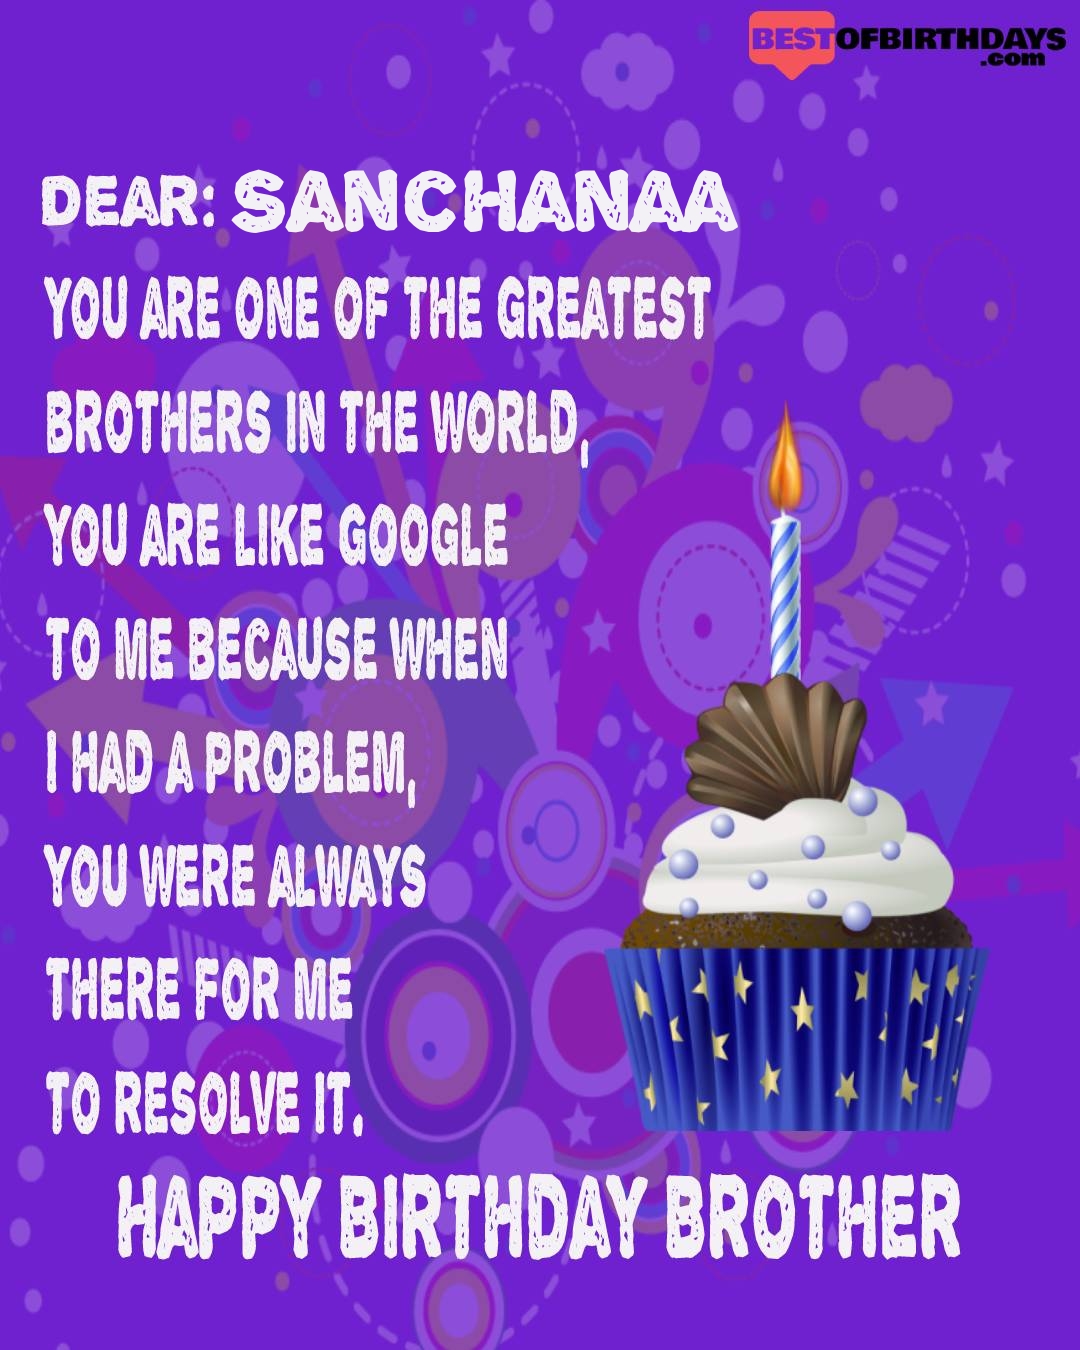 Happy birthday sanchanaa bhai brother bro